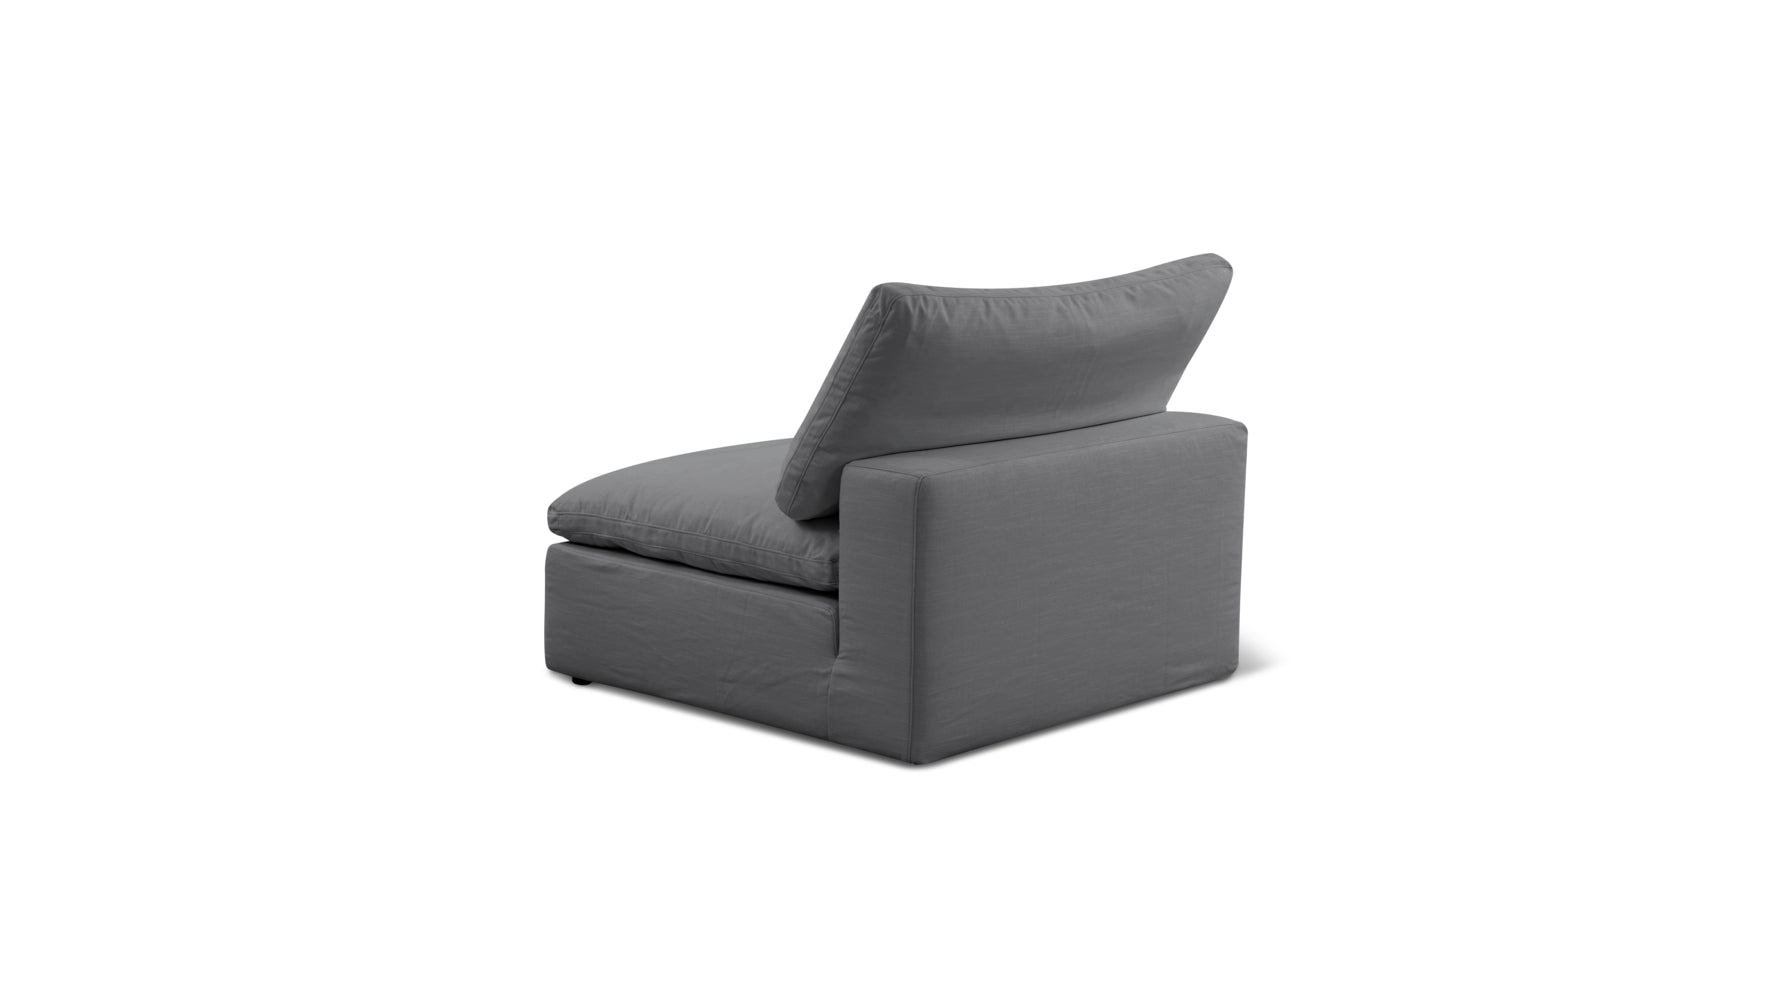 Movie Night™ Armless Chair, Large, Gentle Rain - Image 8